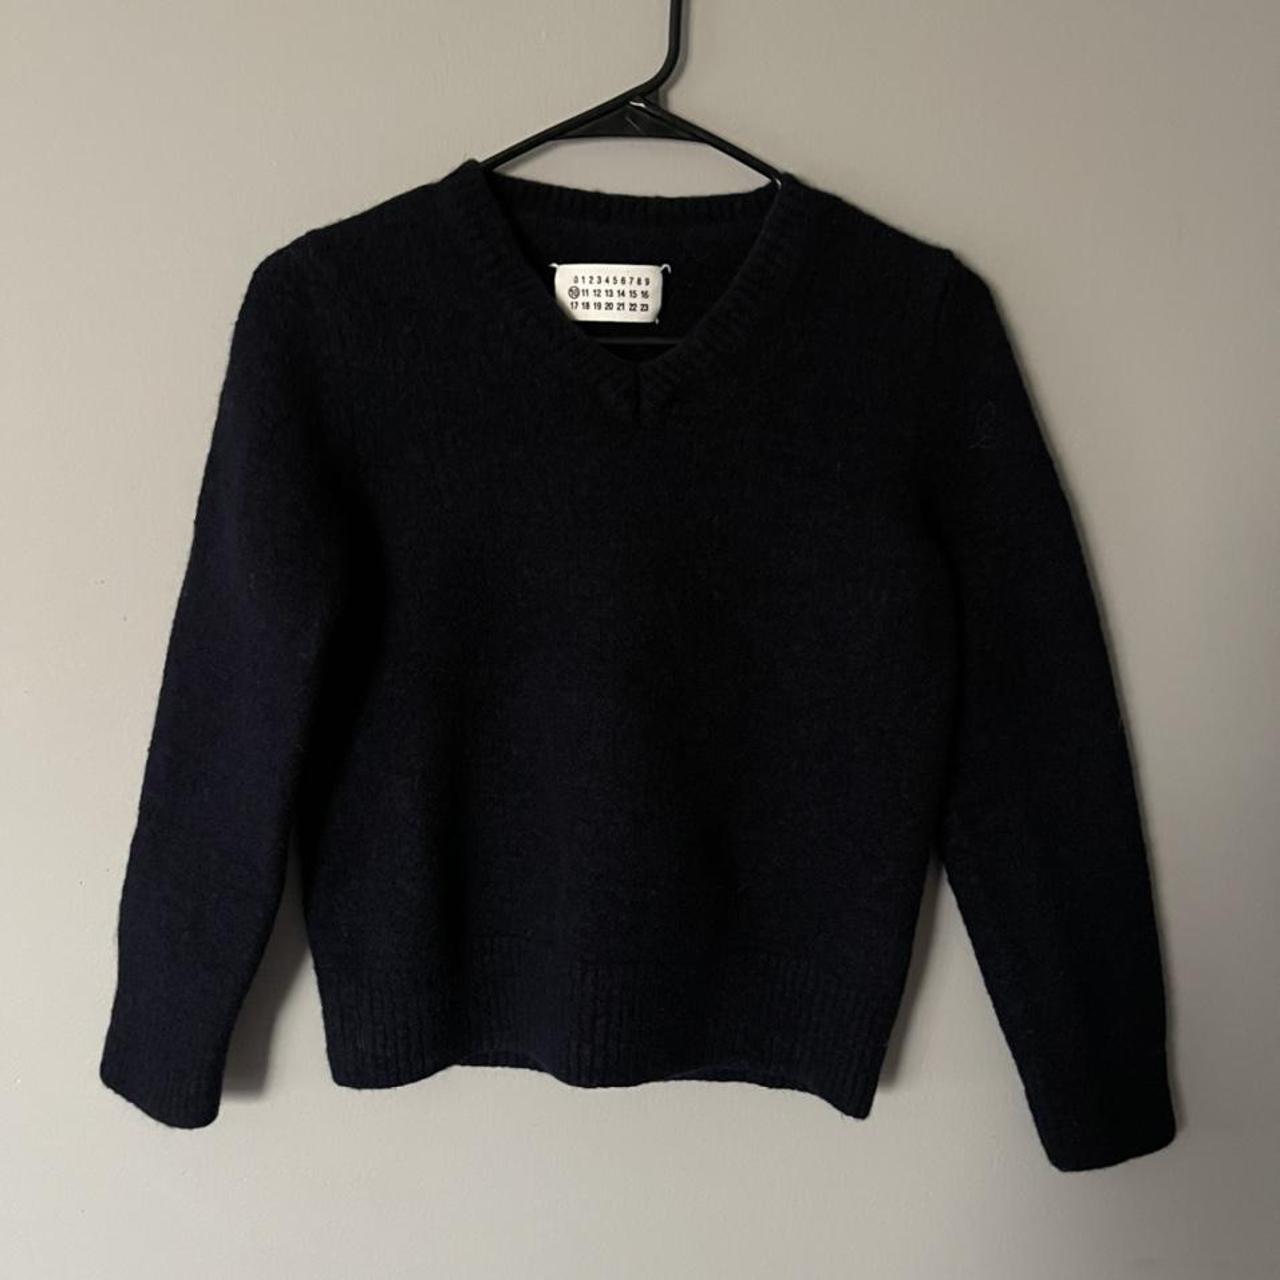 Vintage Maison Martin Margeila sweater. This... - Depop